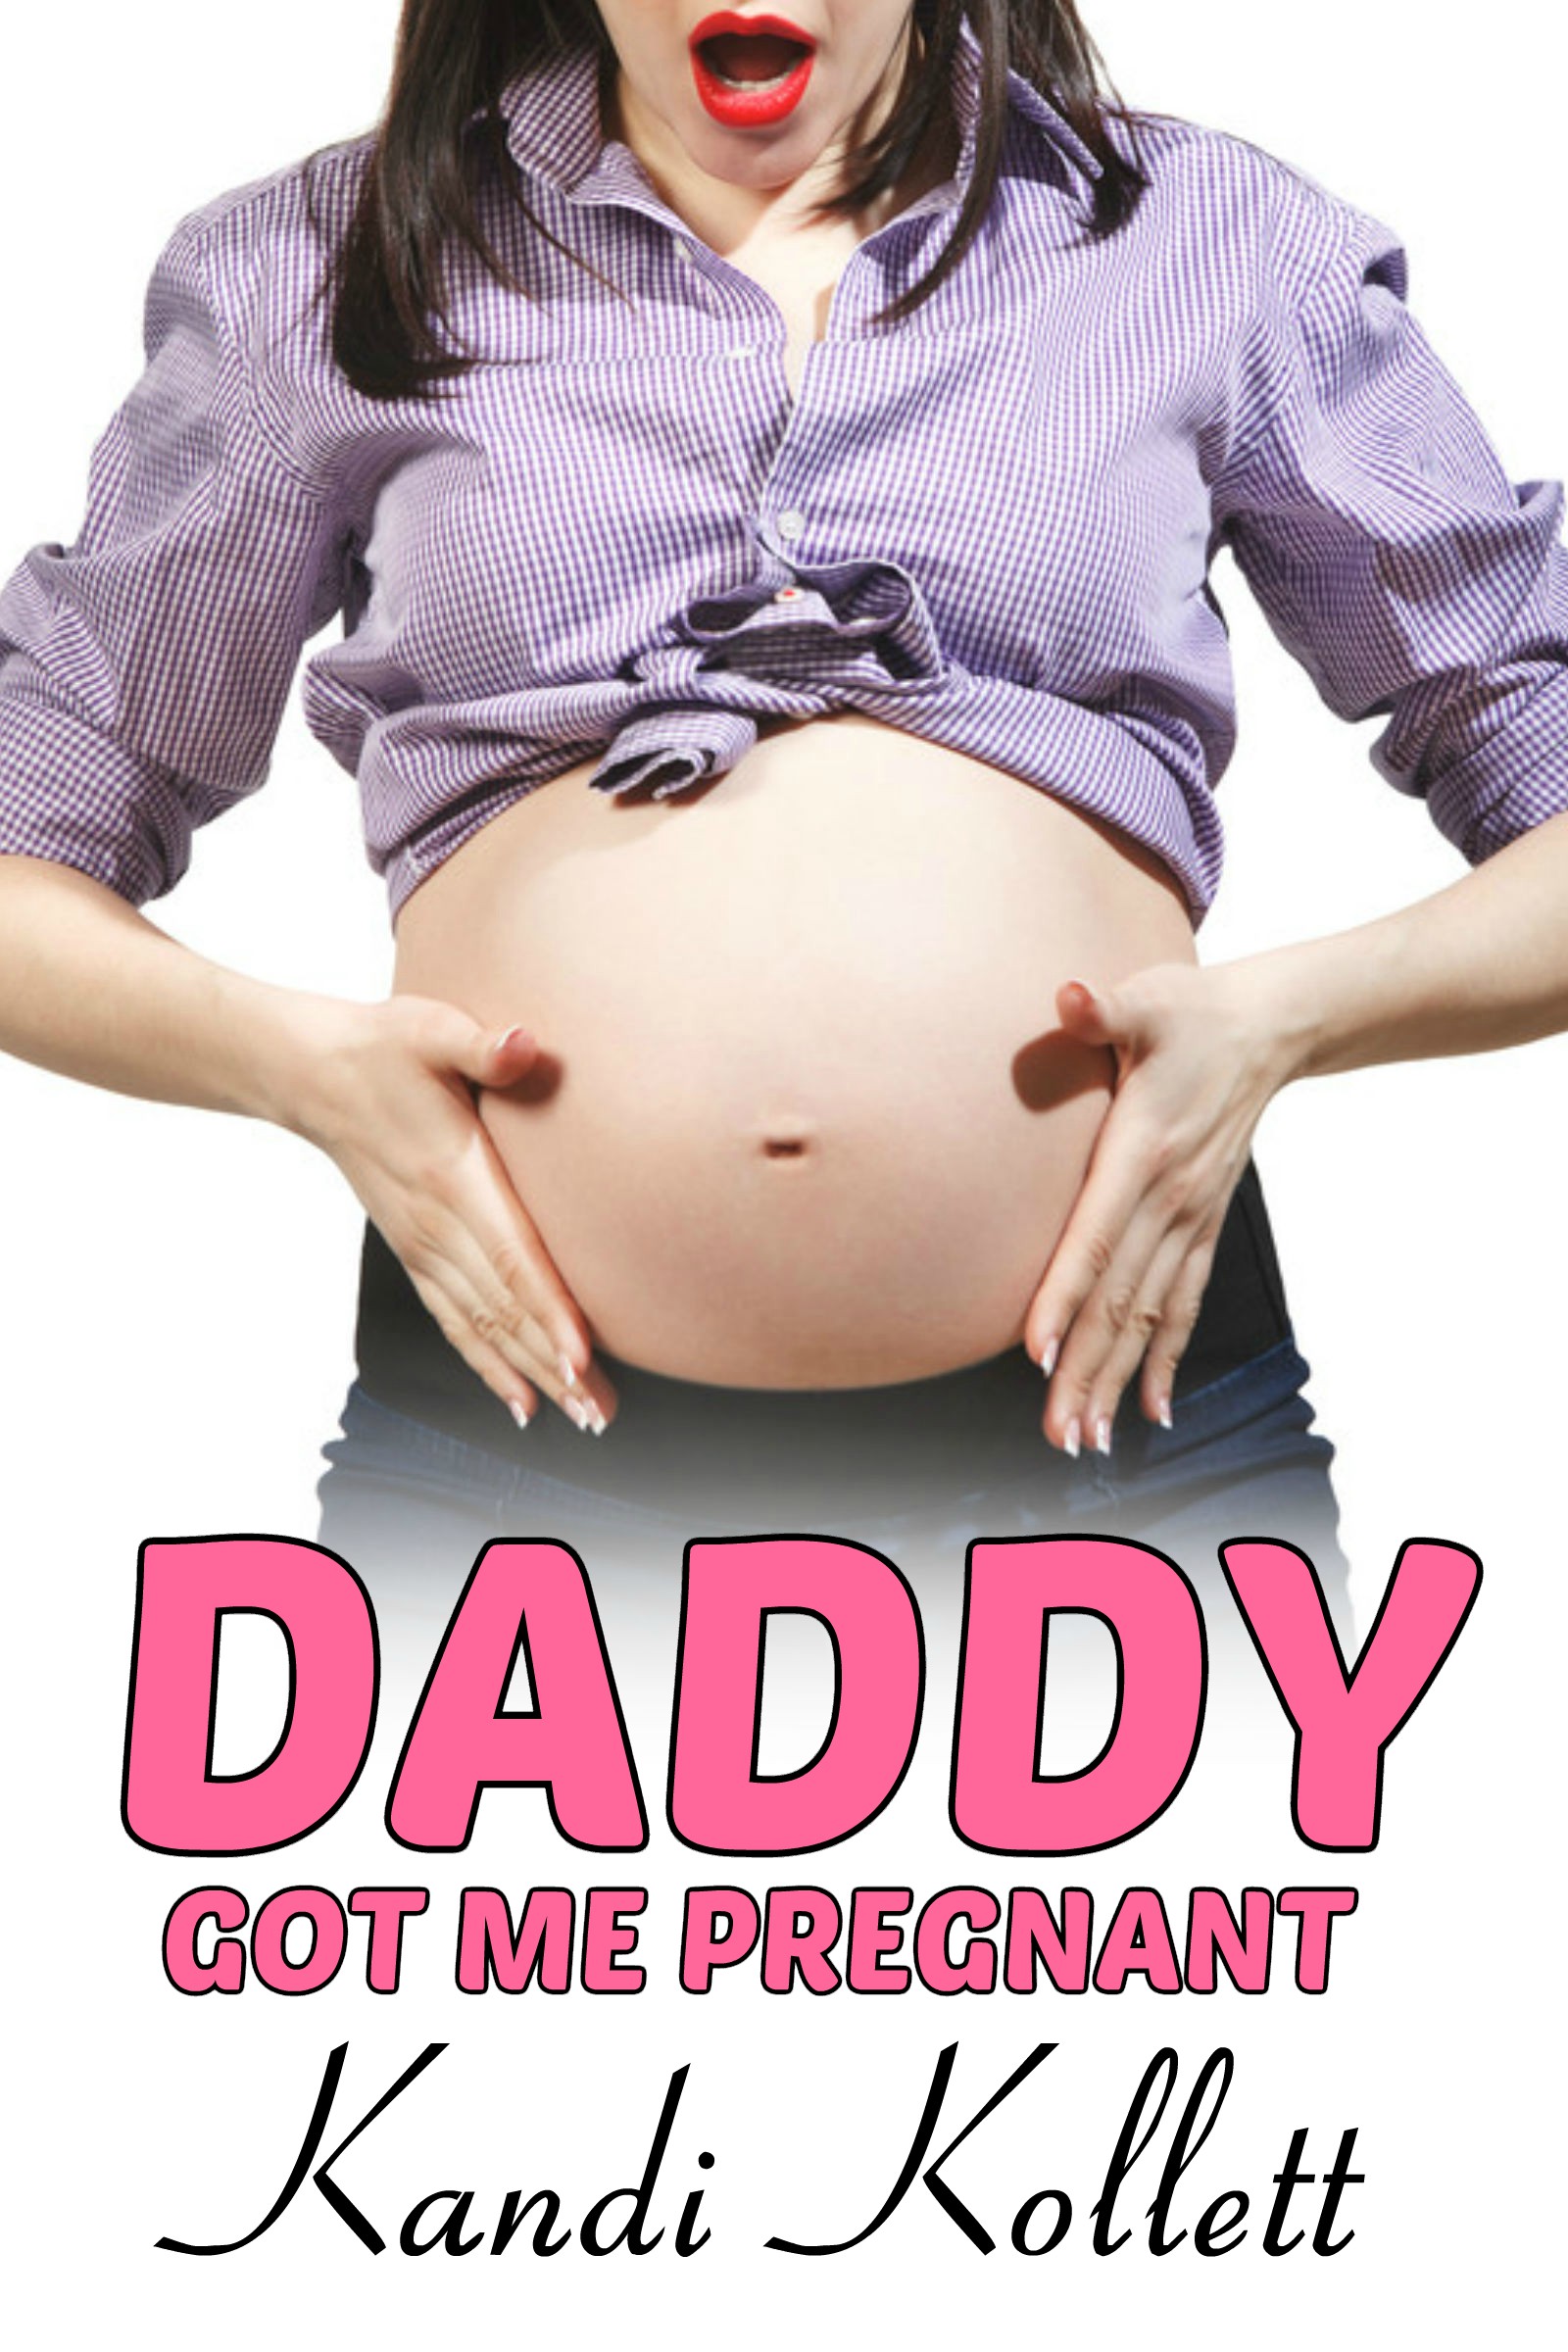 Pregnant Daughter Incest